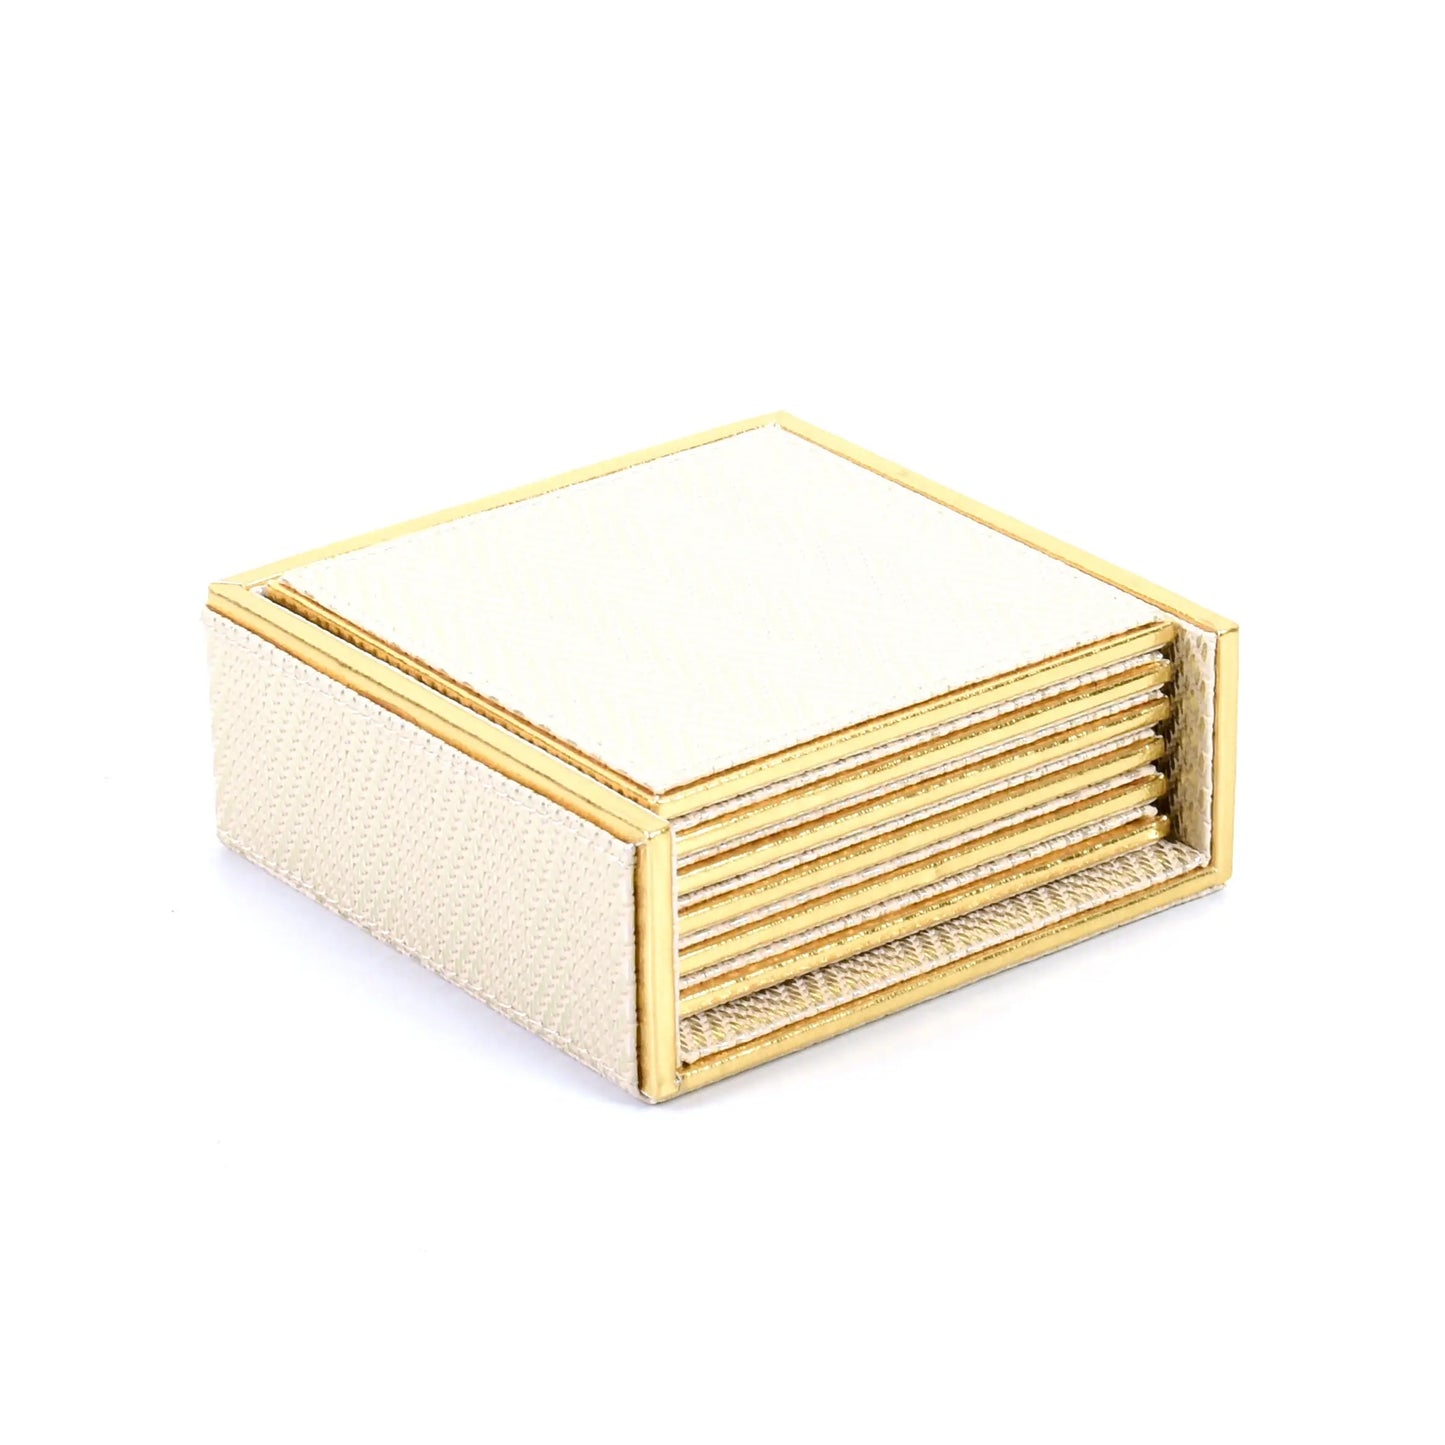 Leatherette Square Coasters Set of 6 | White Gold | Hamilton Ichkan